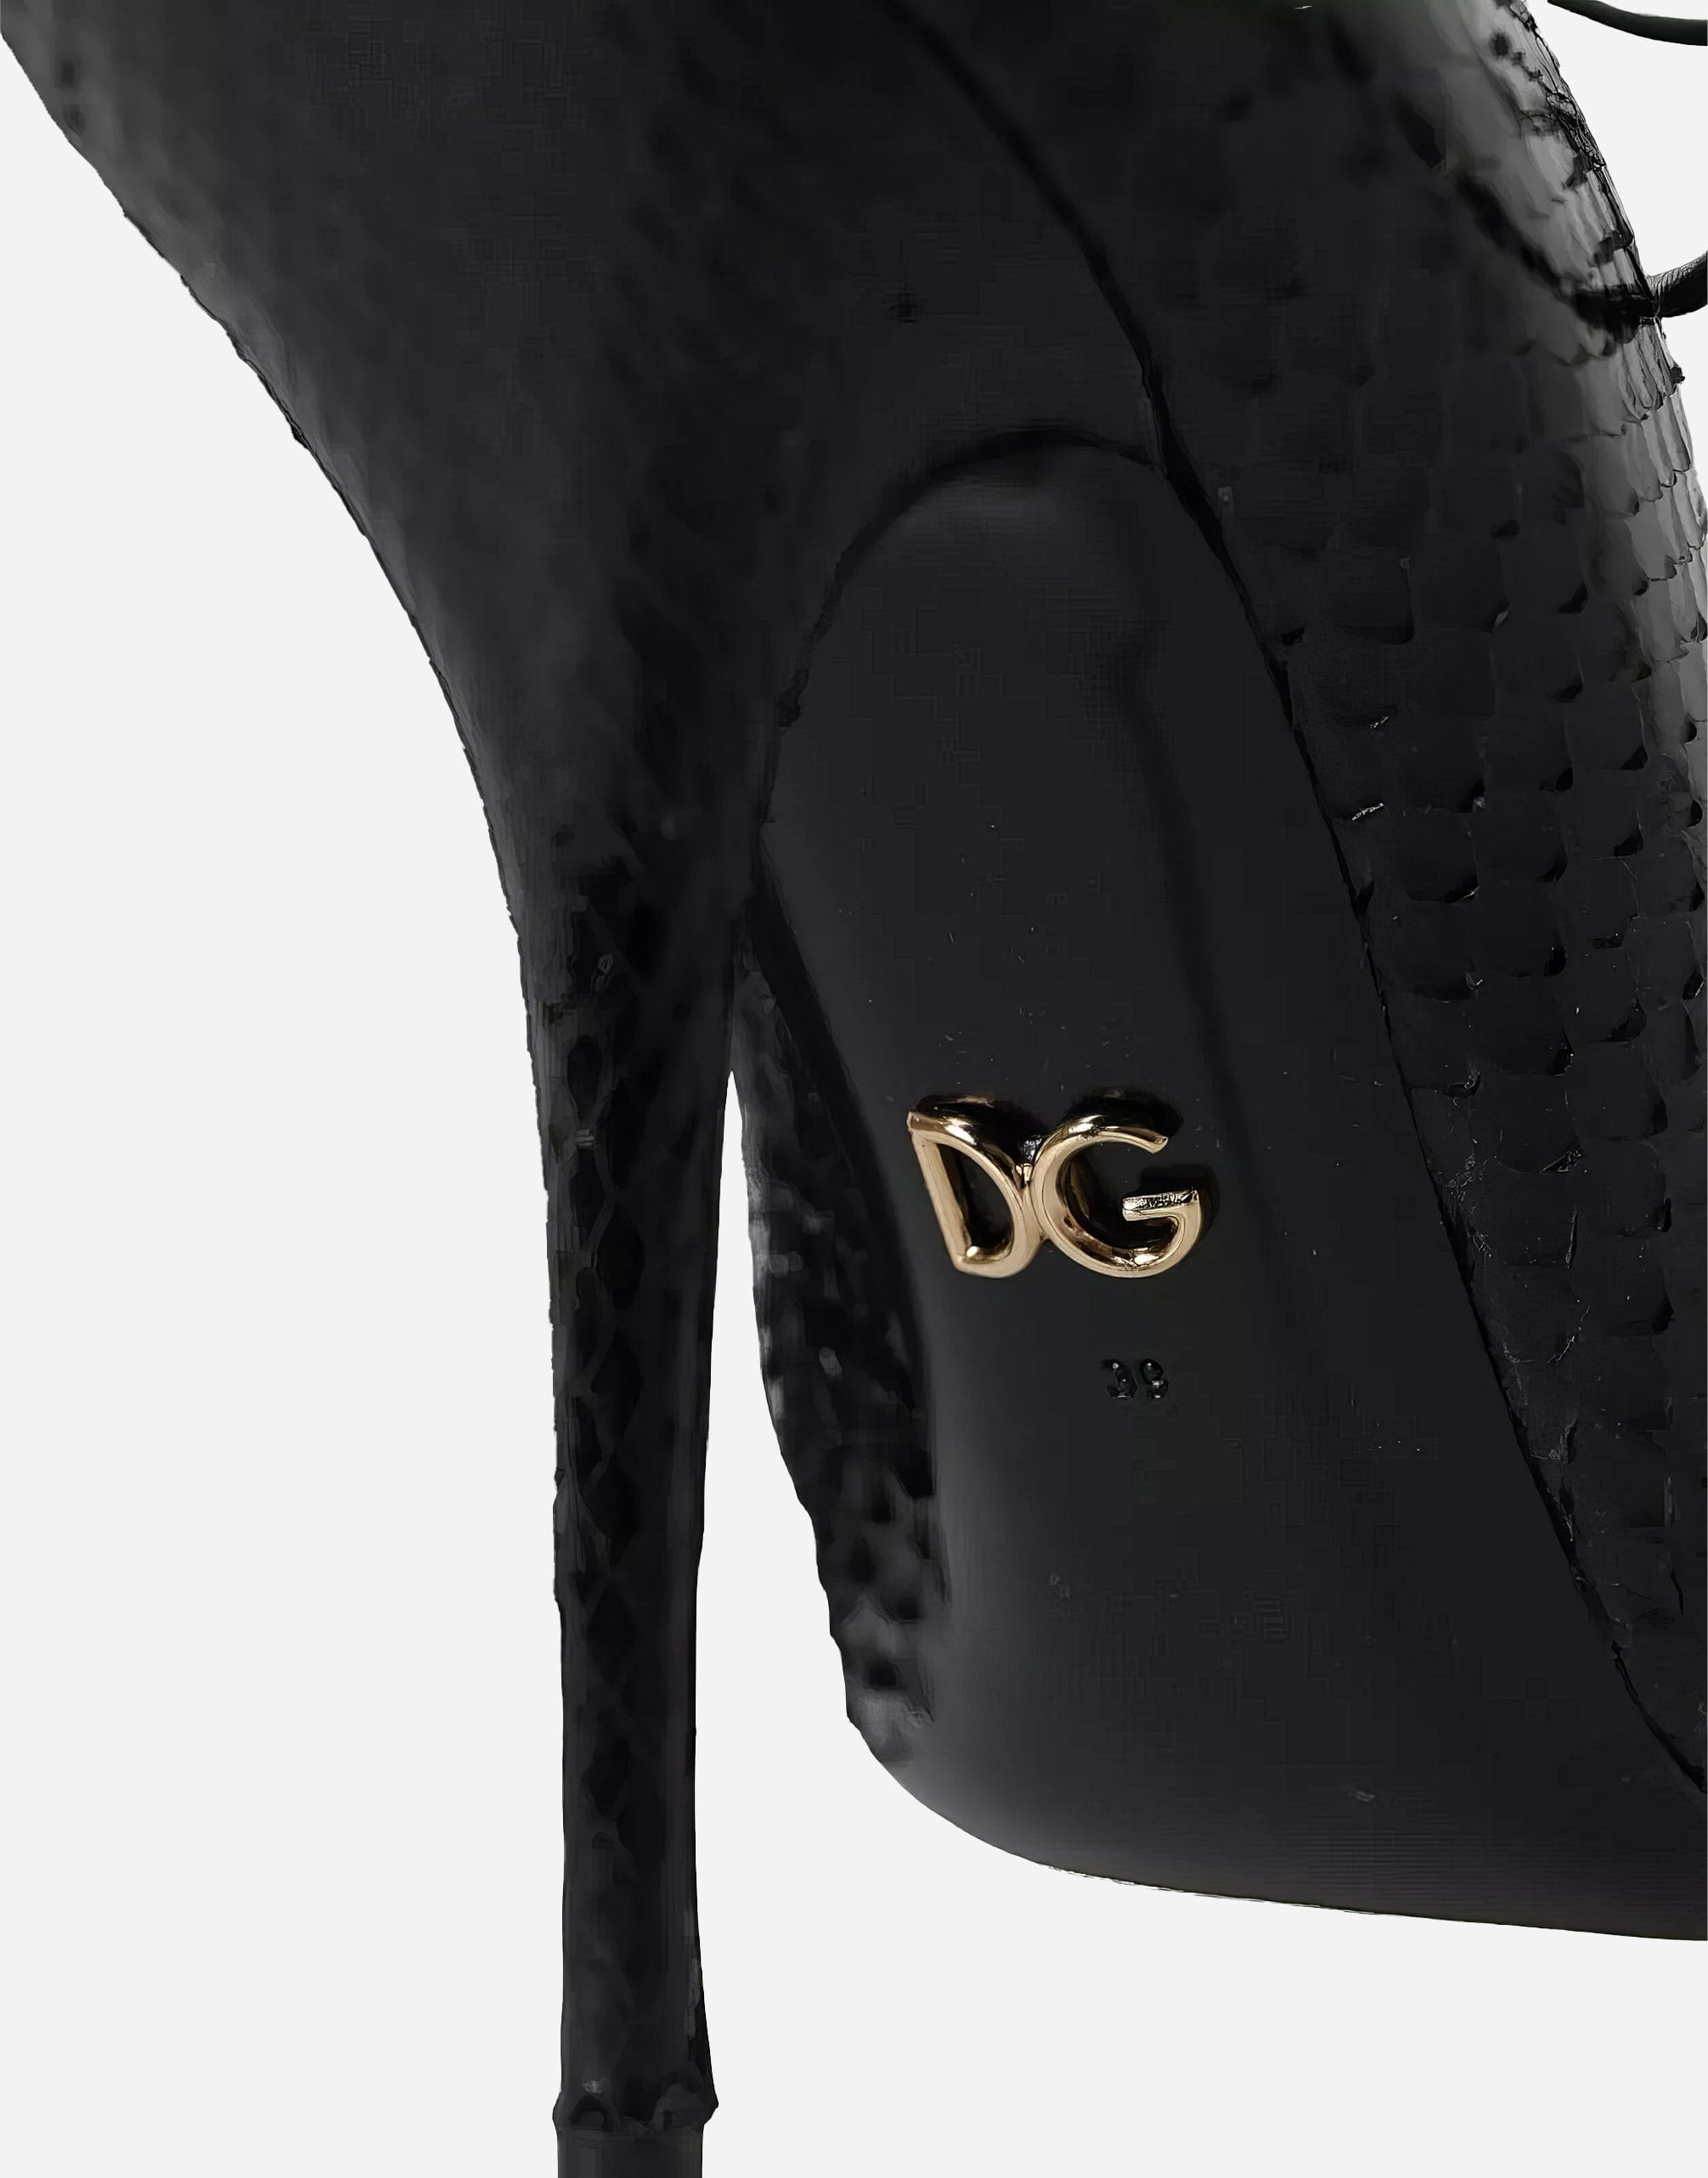 Dolce & Gabbana Black Python Leather Mary Jane Pumps Shoes